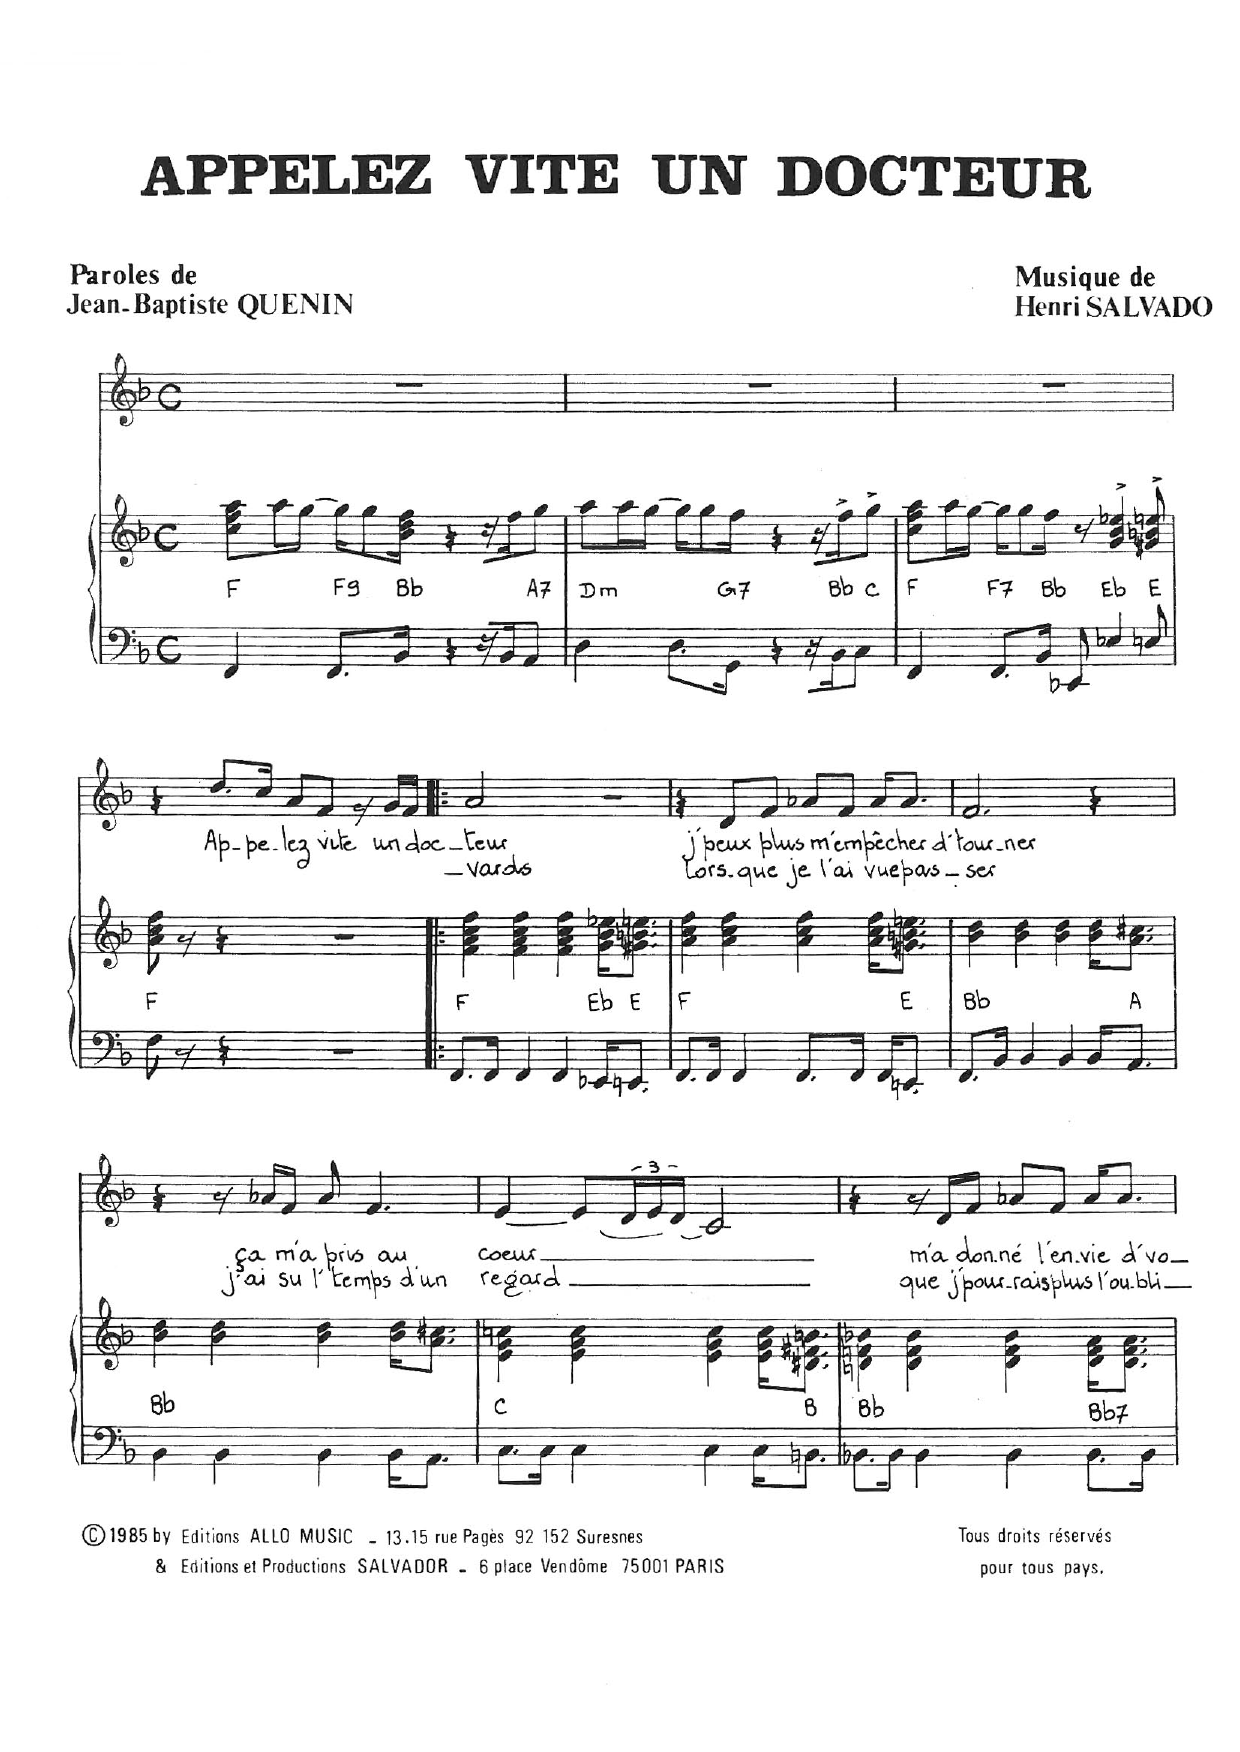 Henri Salvador Appelez Vite Un Docteur Sheet Music Notes & Chords for Piano & Vocal - Download or Print PDF